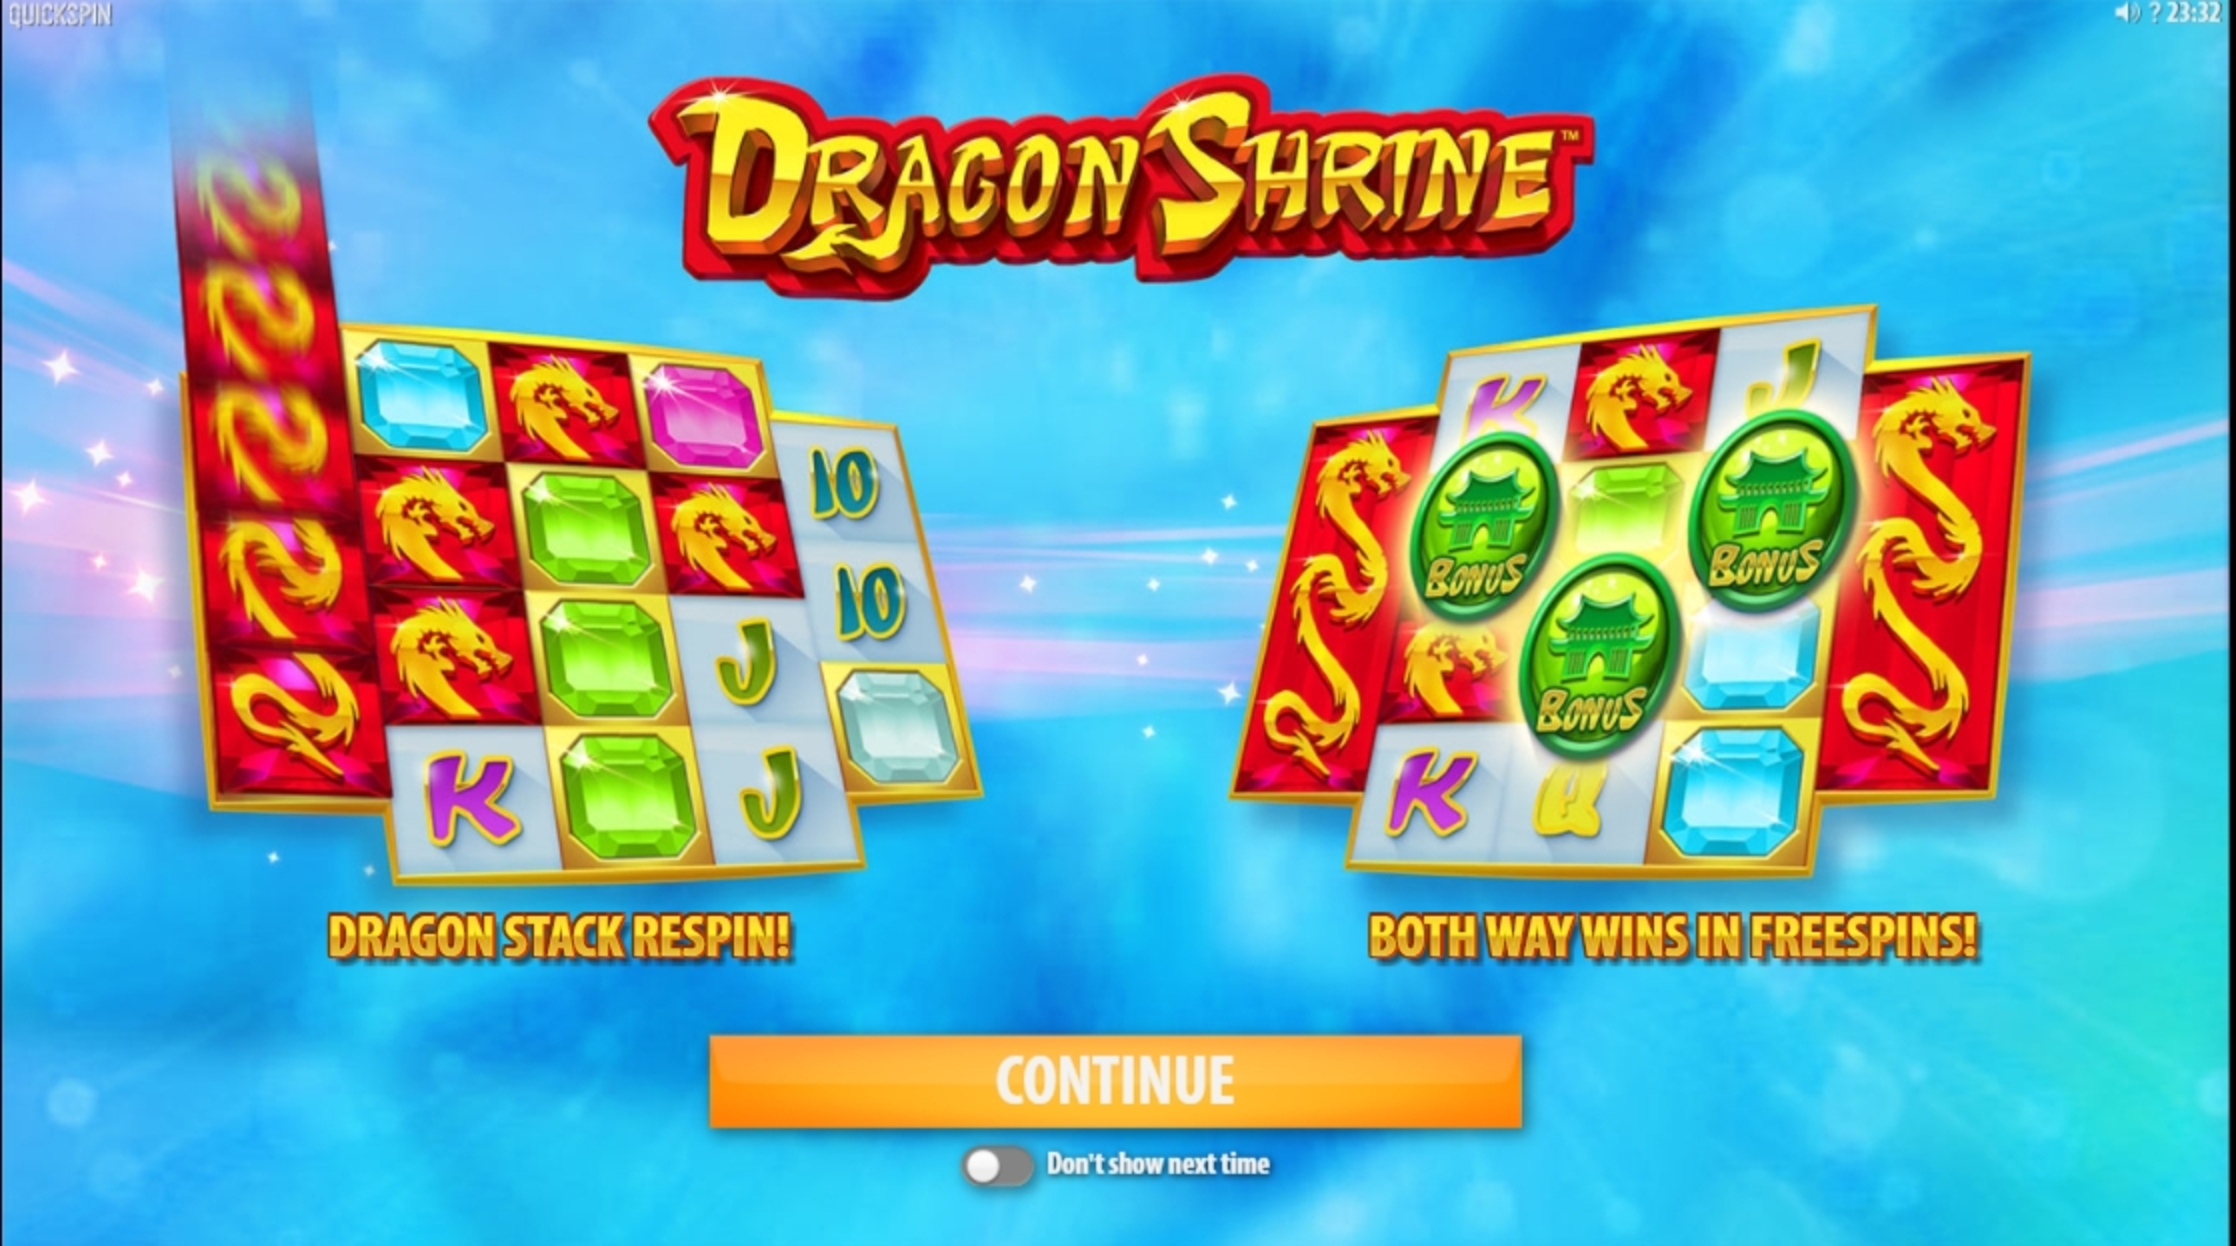 Play Dragon Shrine Free Casino Slot Game by Quickspin